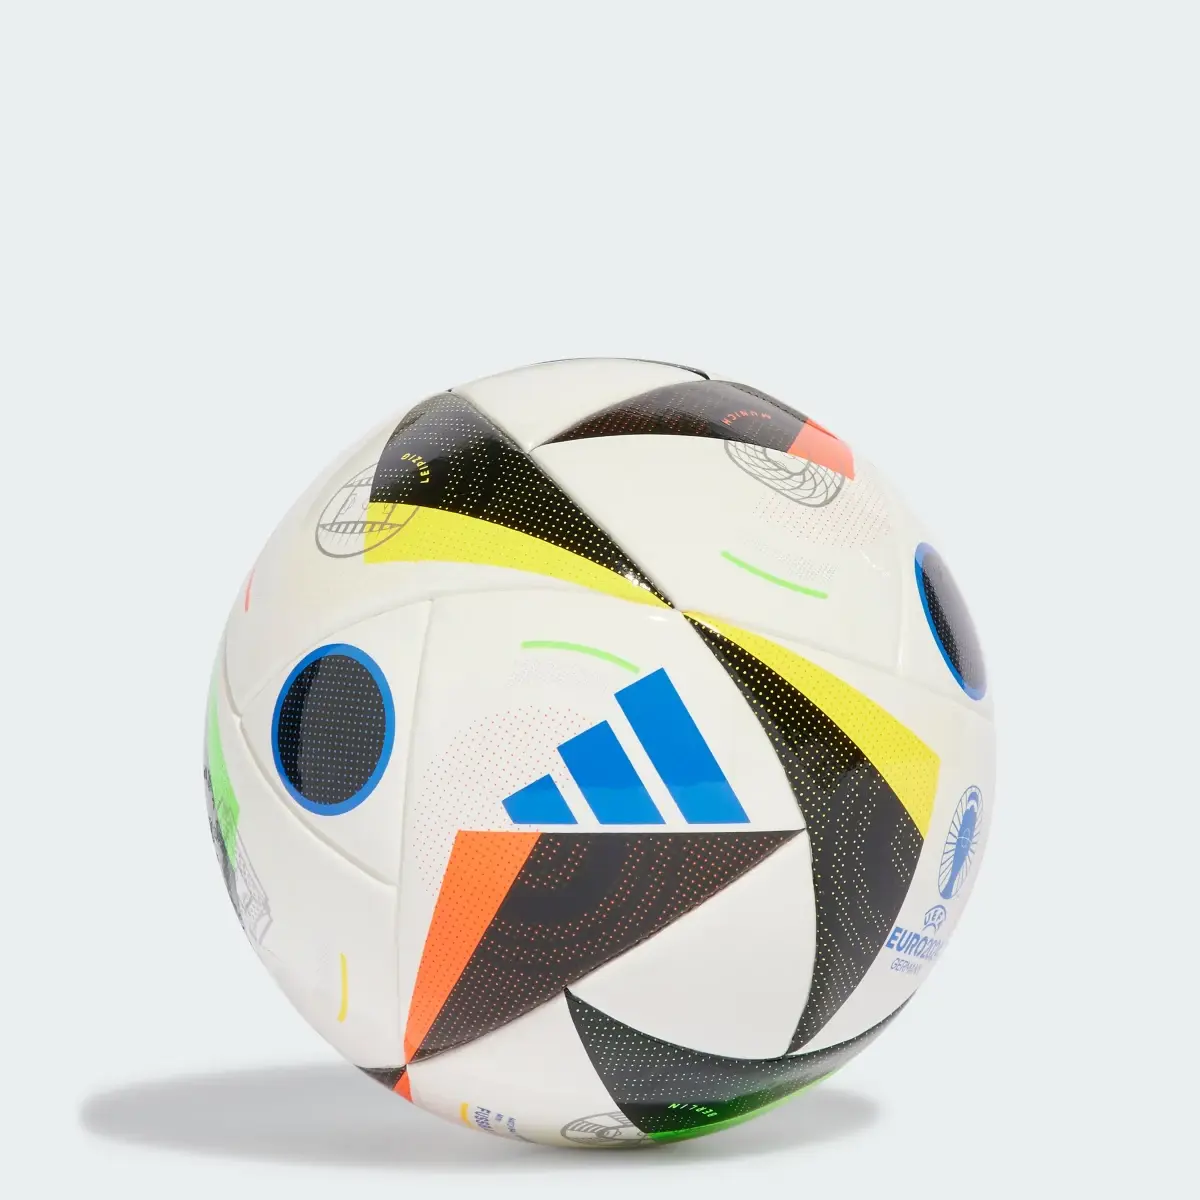 Adidas Fussballliebe Mini Ball. 1